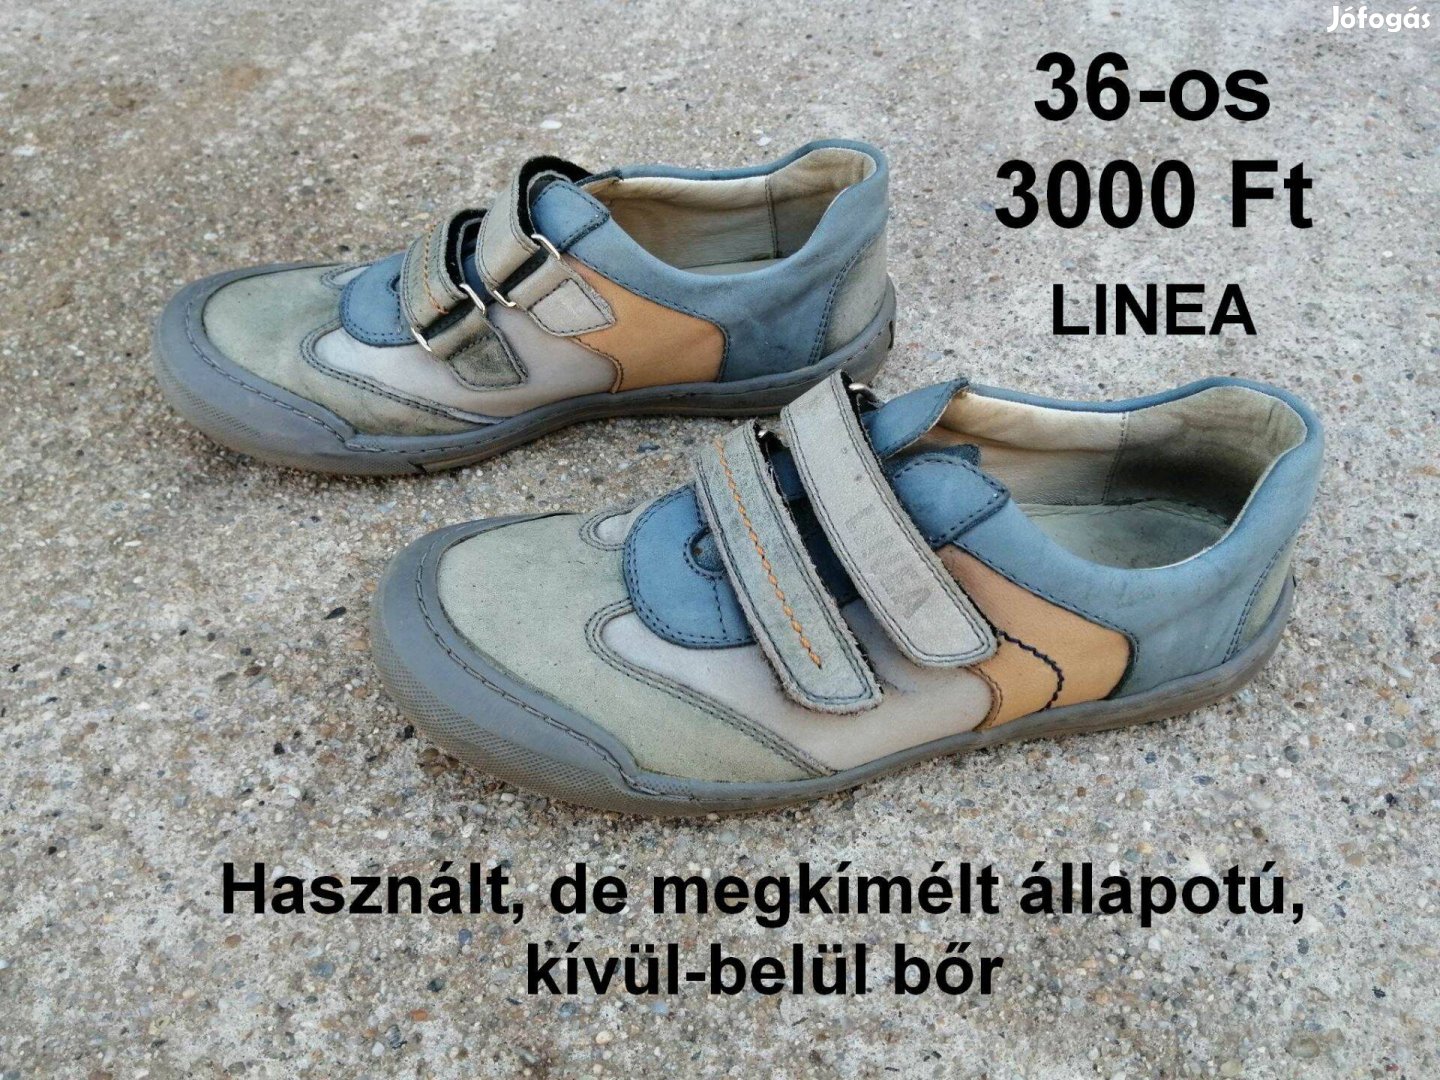 36-os Linea átmeneti, utcai cipő cipő eladó!